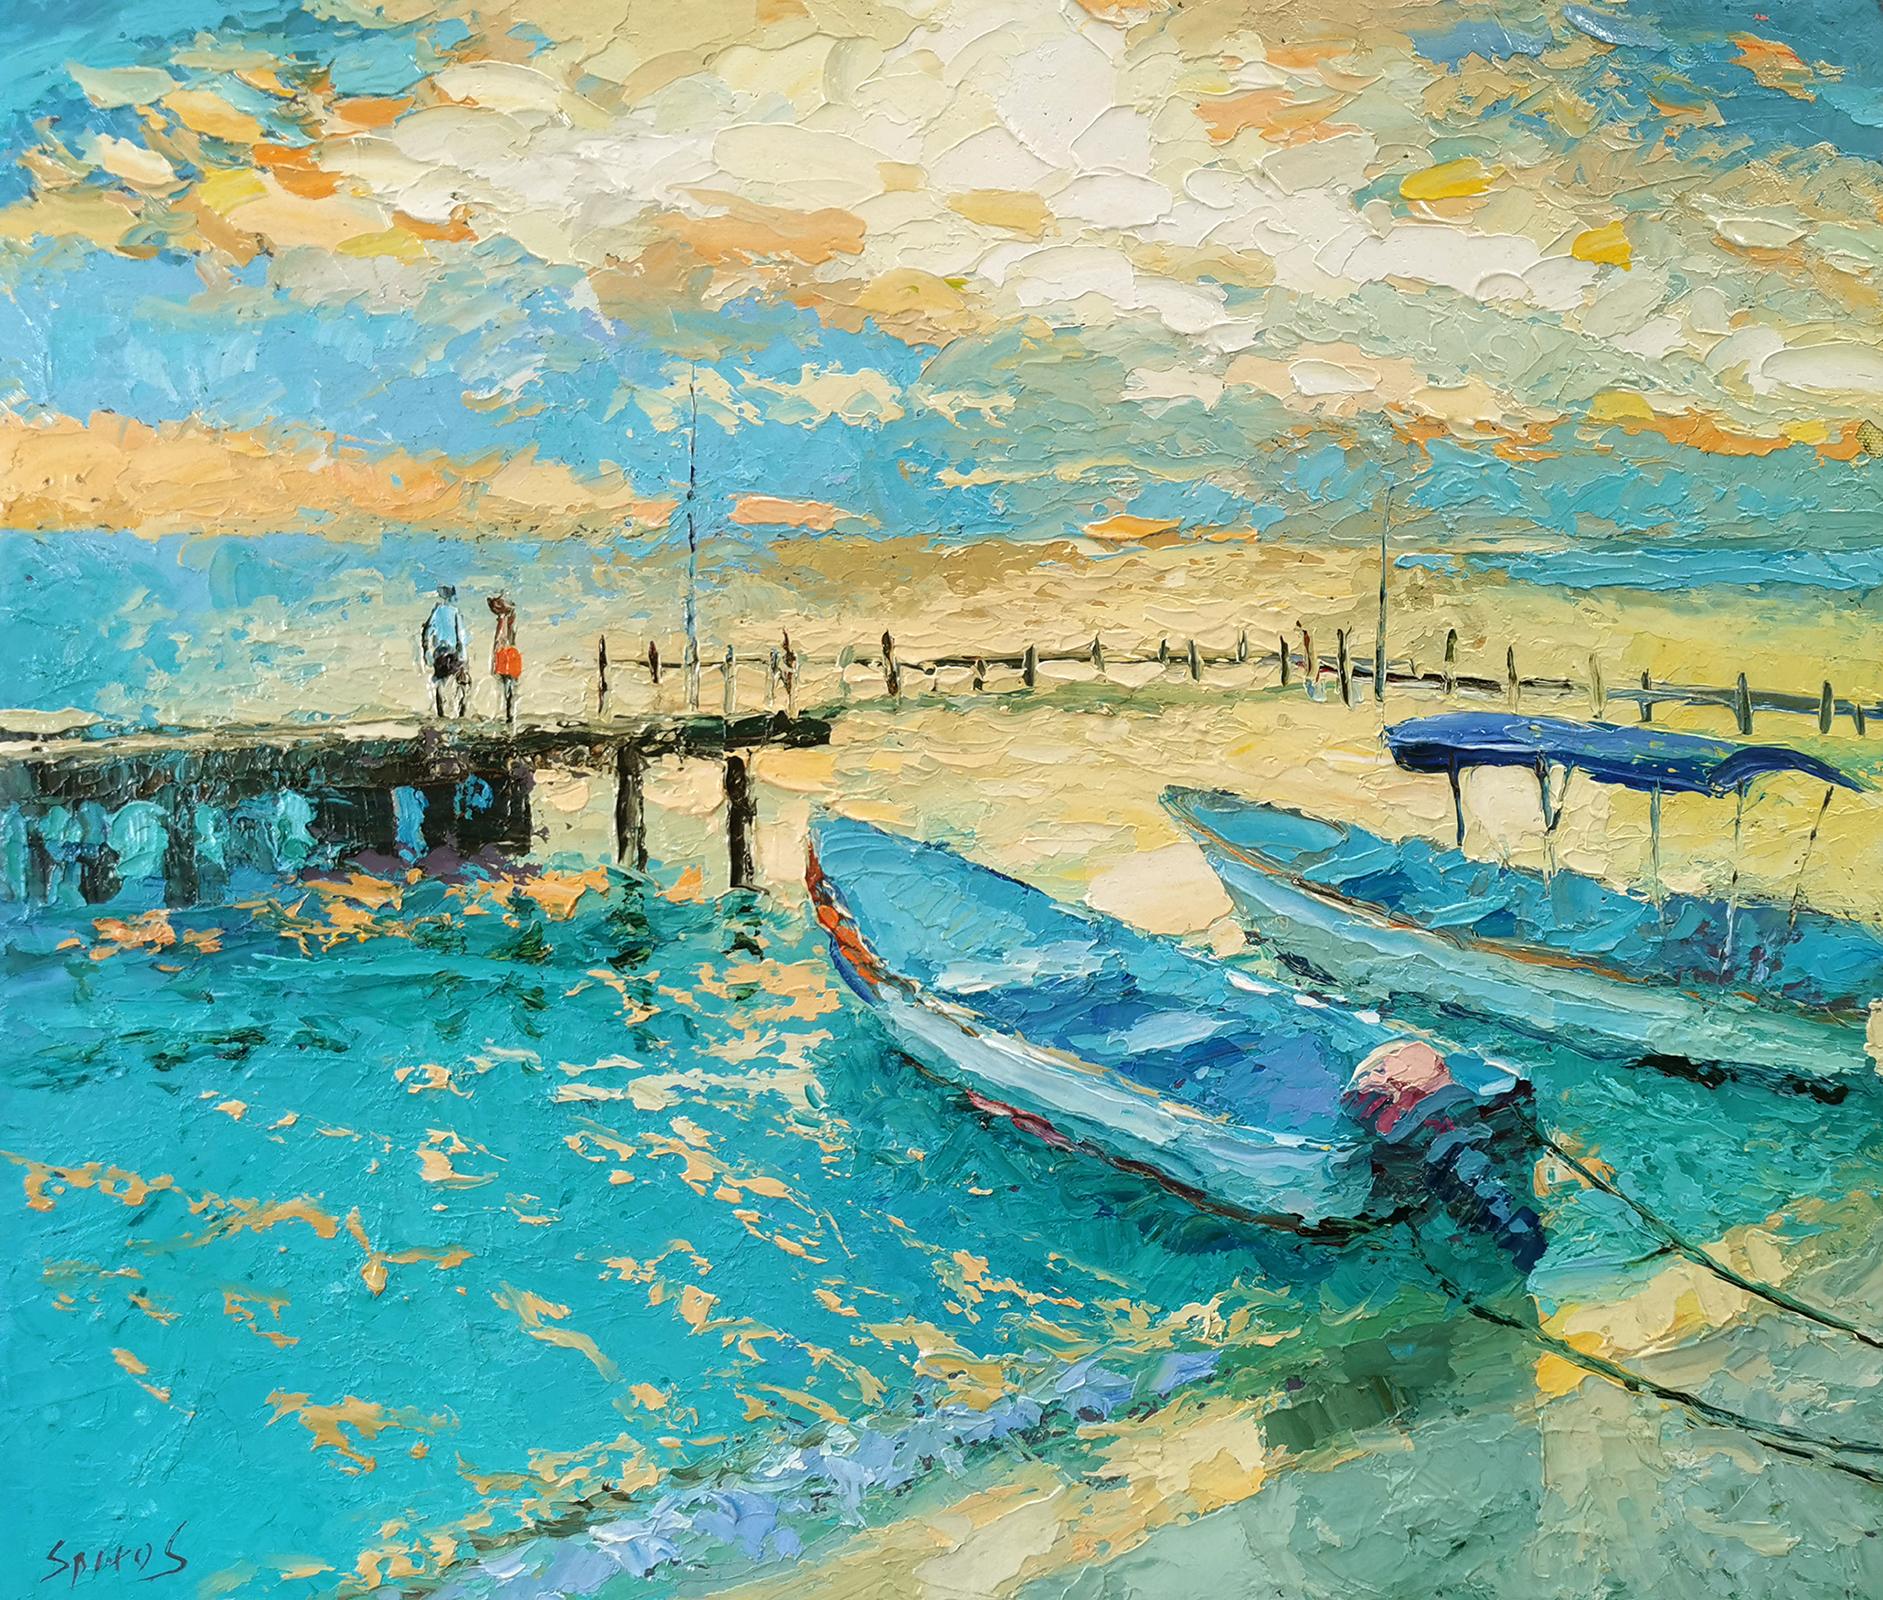 Dmitry Spiros Landscape Painting – Abend-Fischboote